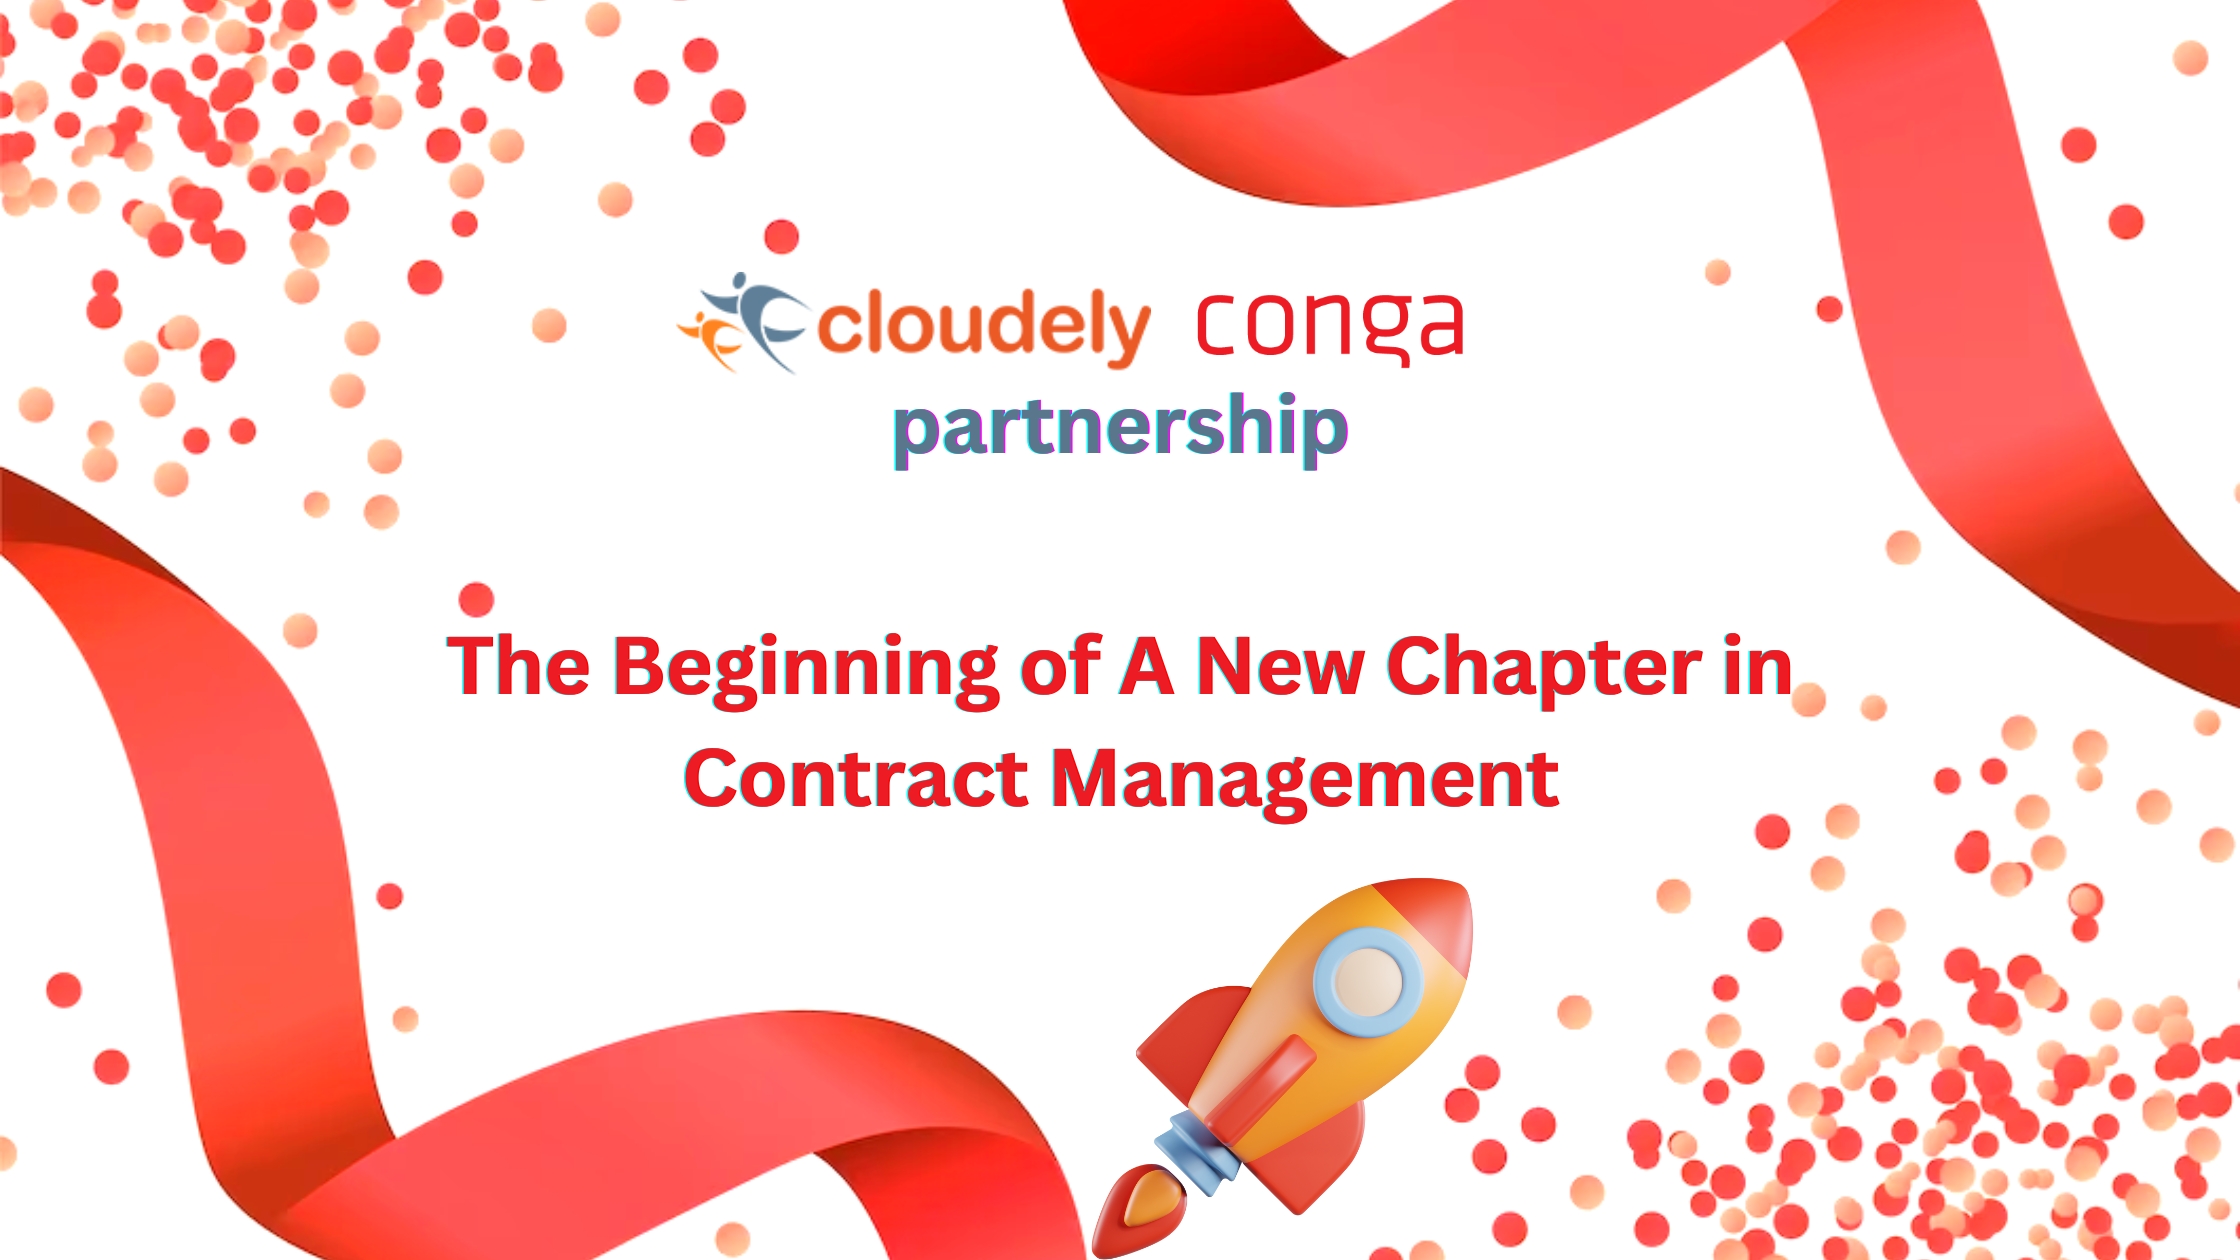 Cloudely Conga Partnership